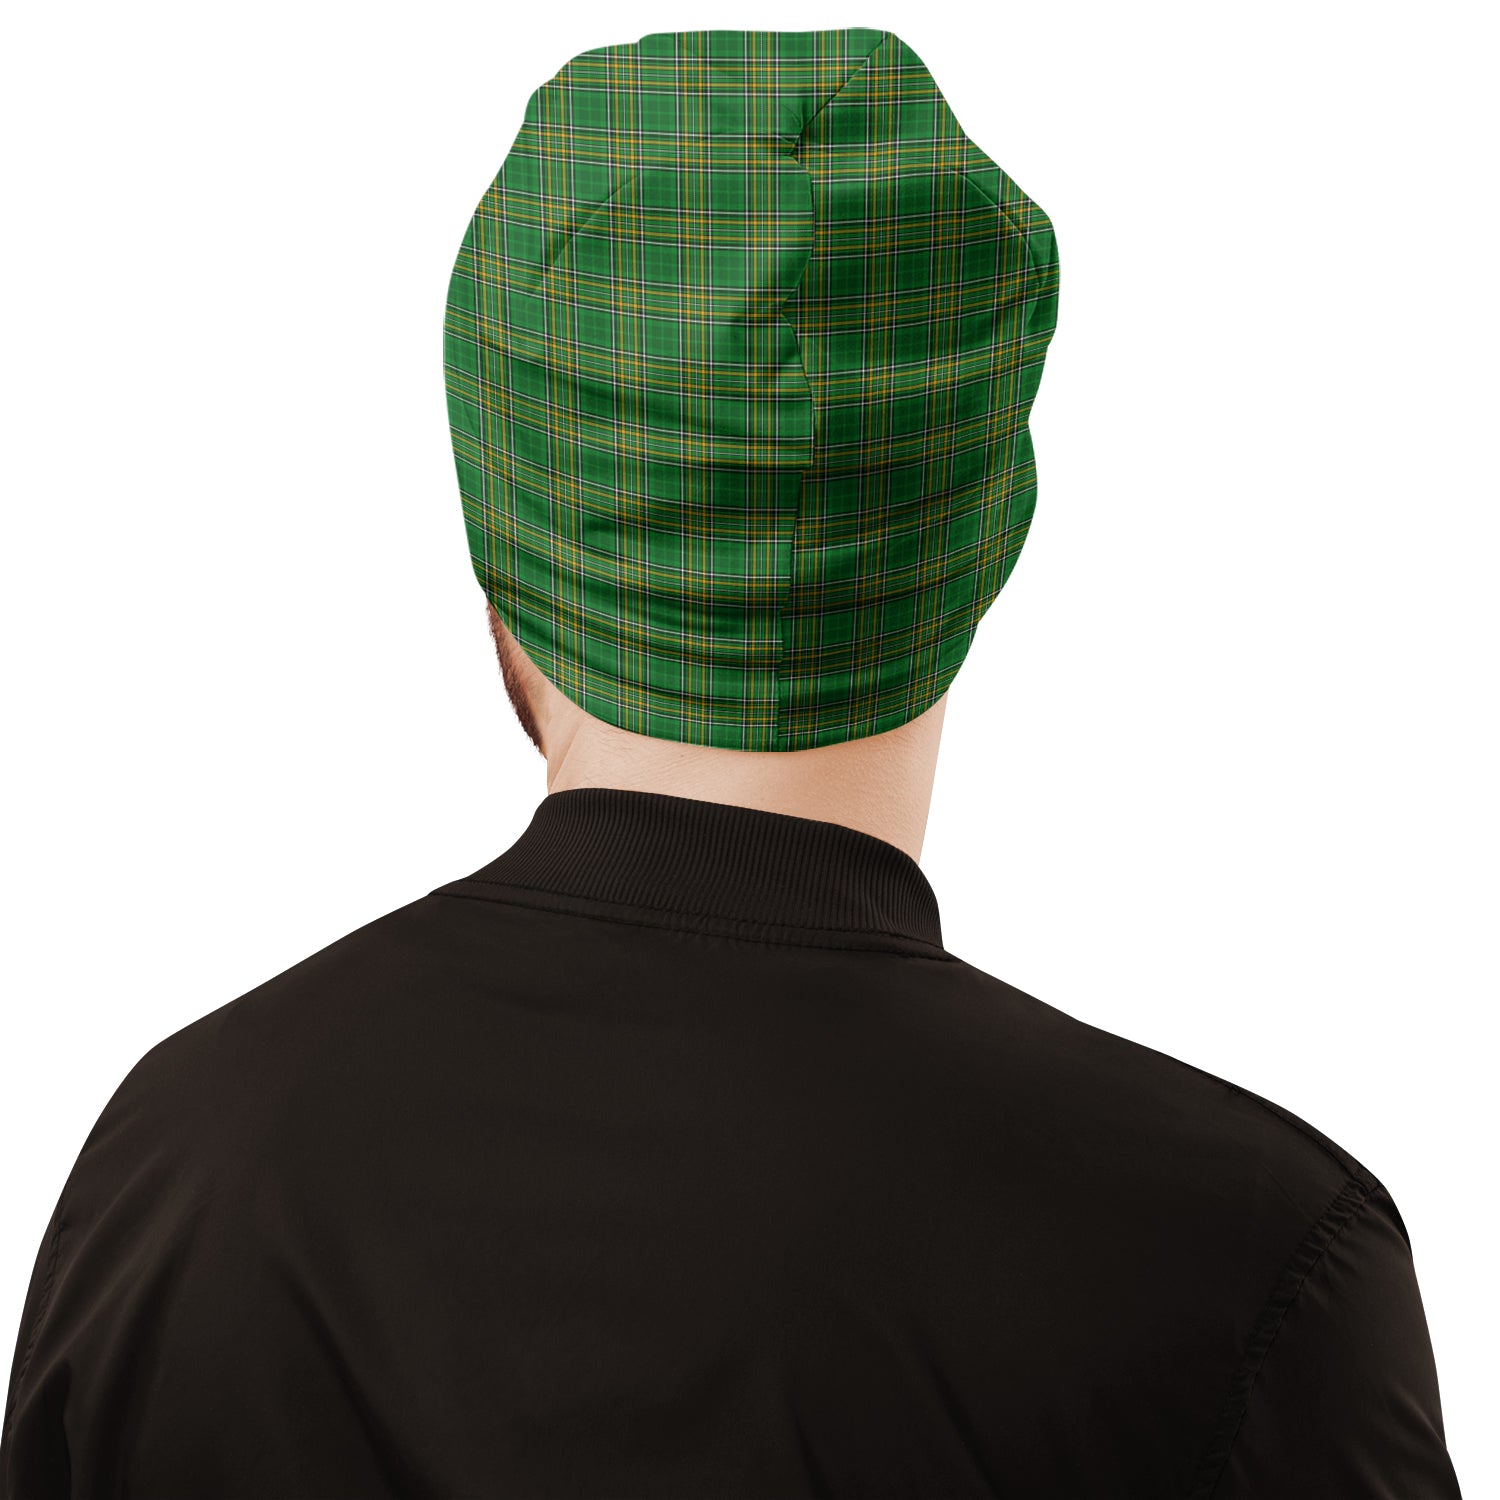 ireland-national-tartan-beanies-hat